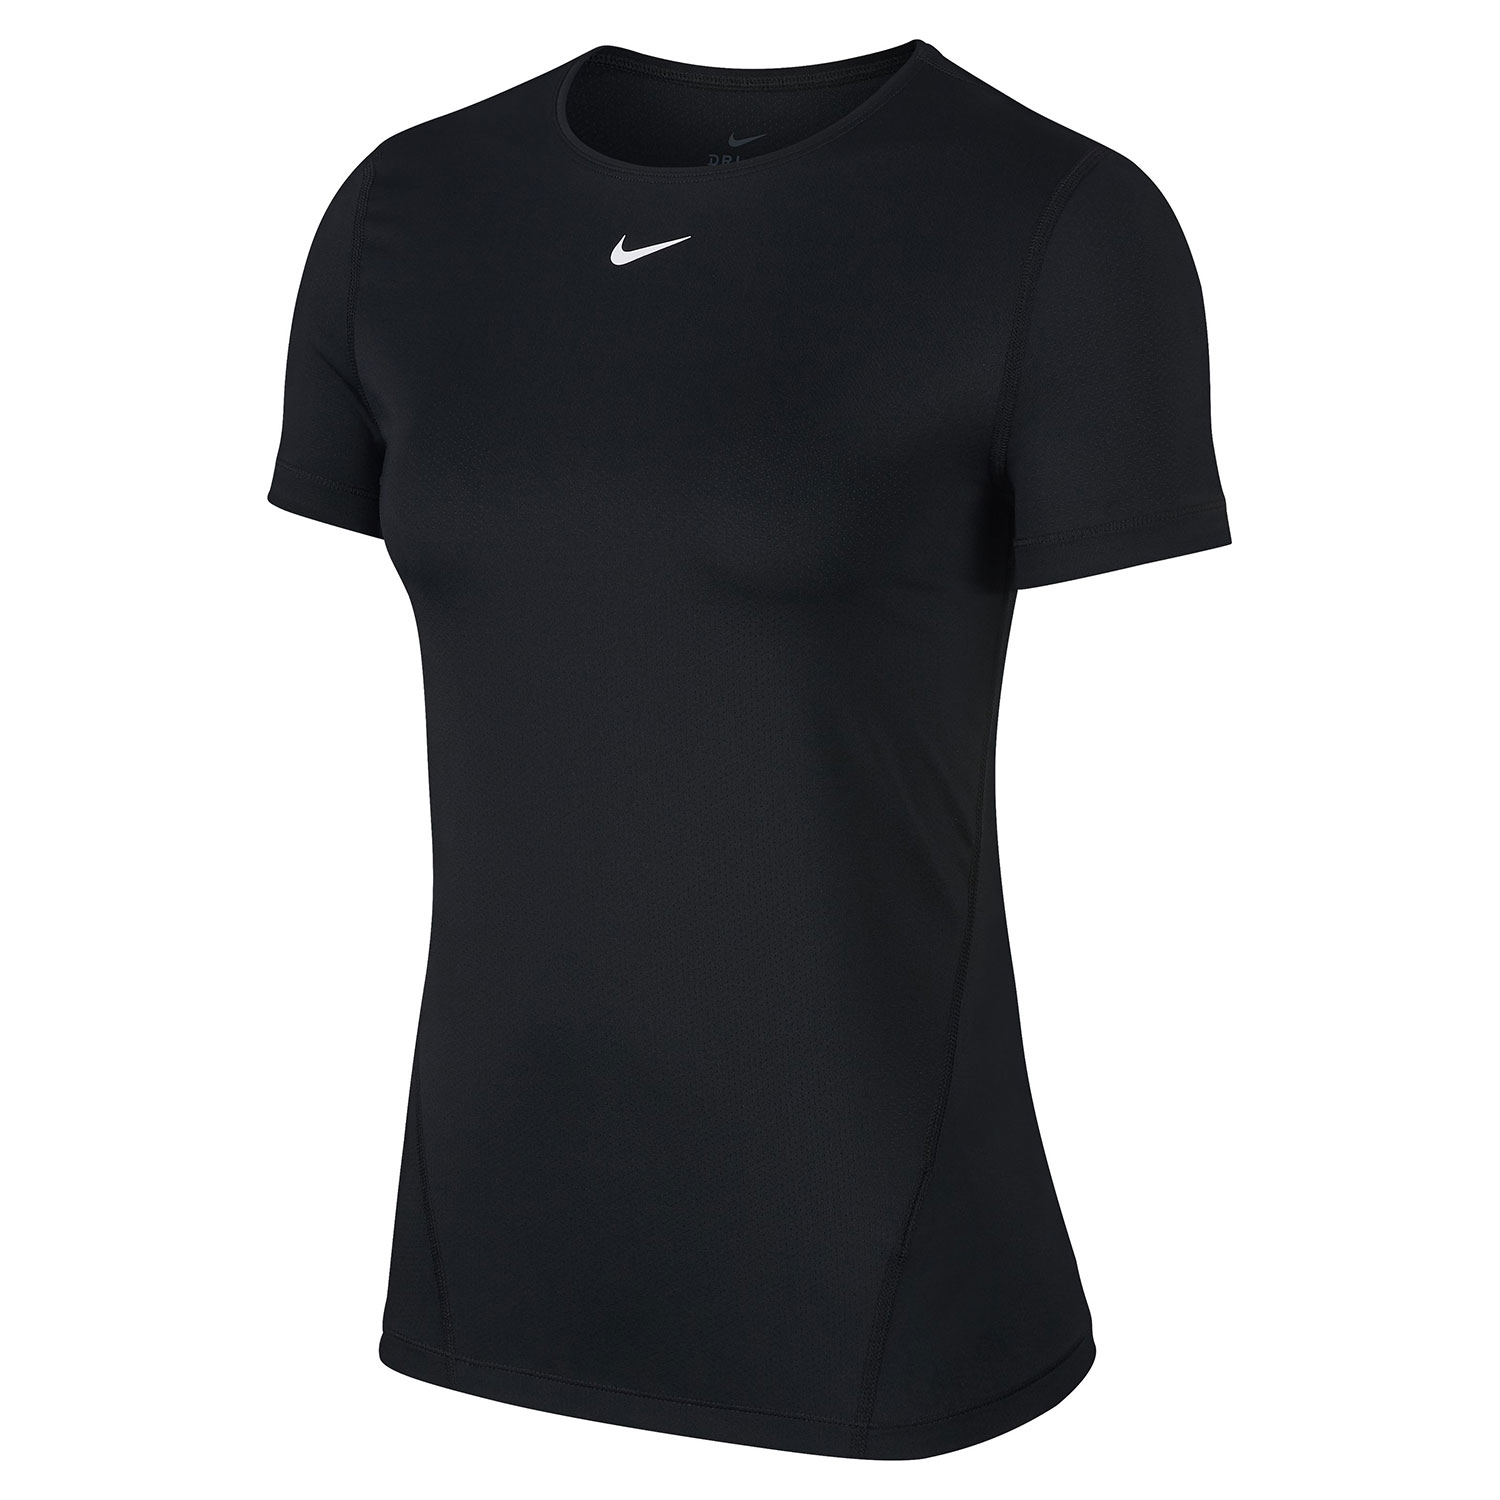 Nike Pro Women’s Running T-Shirt - Black/White